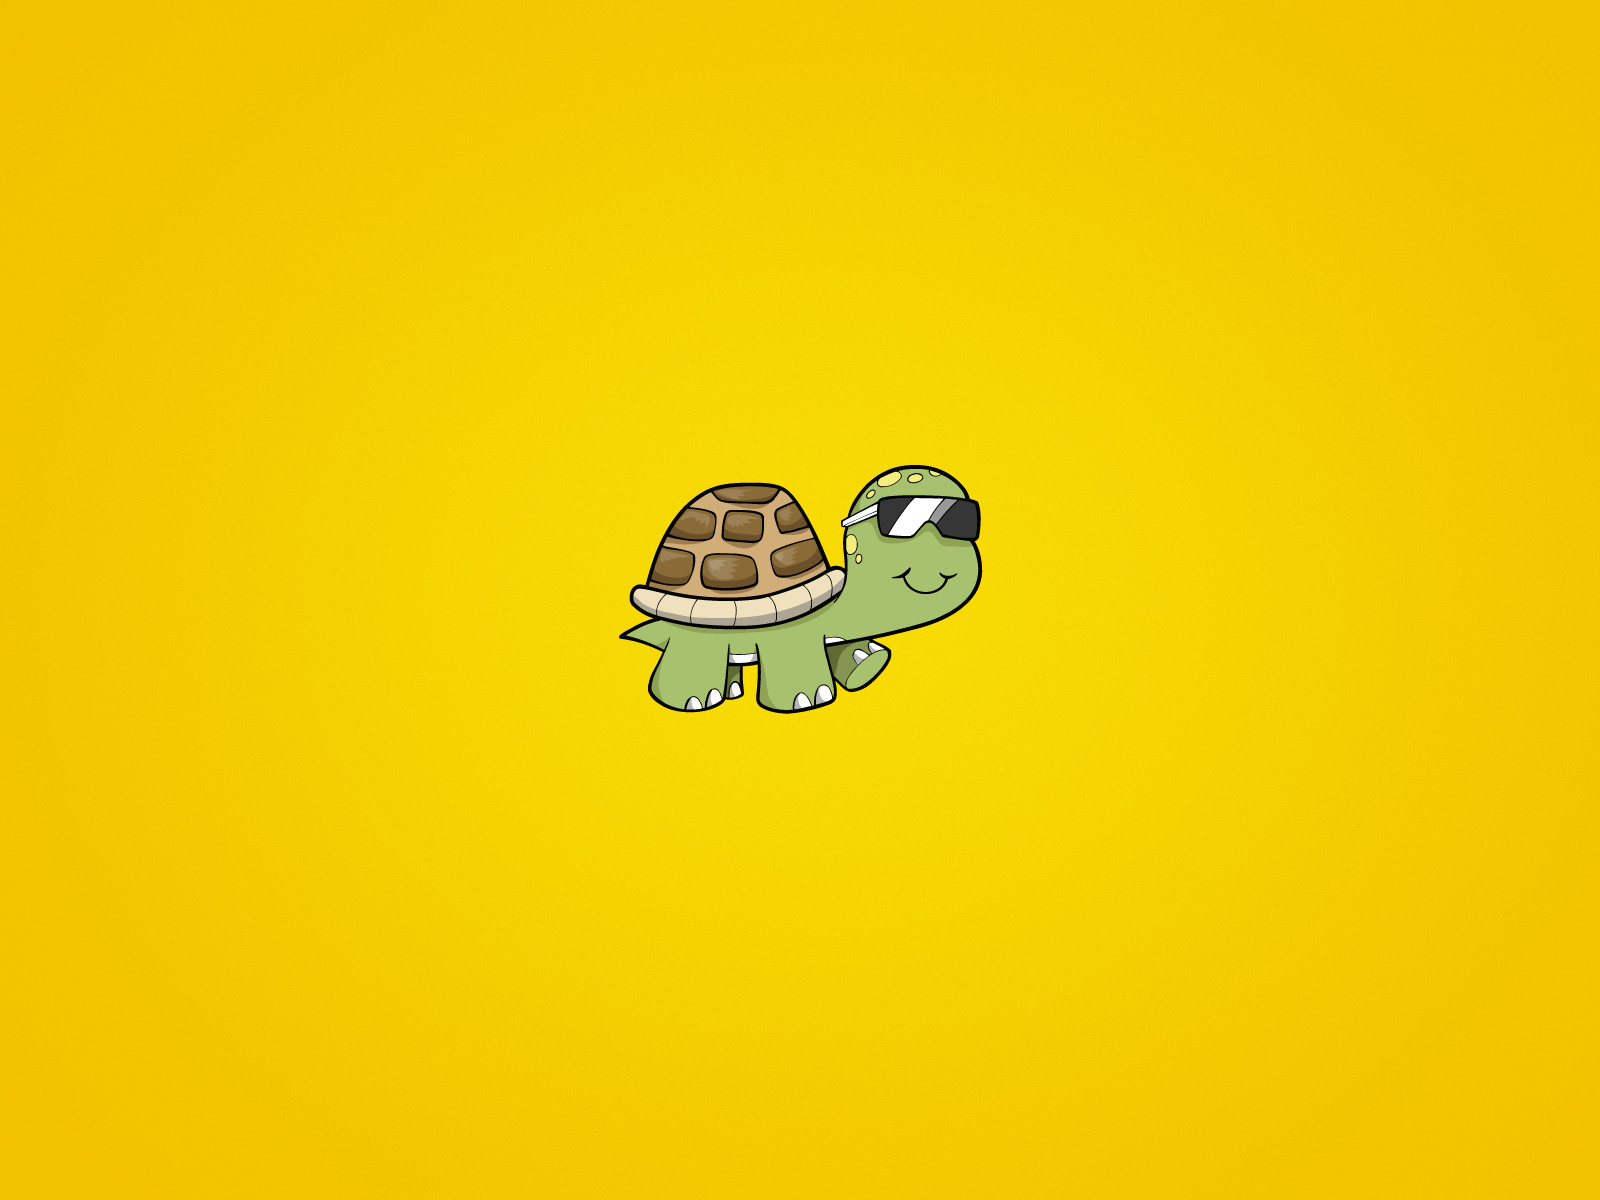 Черепаха Минимализм. Желтая черепаха. Обои на планшет Минимализм. Обои на компьютер Минимализм с черепашкой. Черепаха в очках картинка